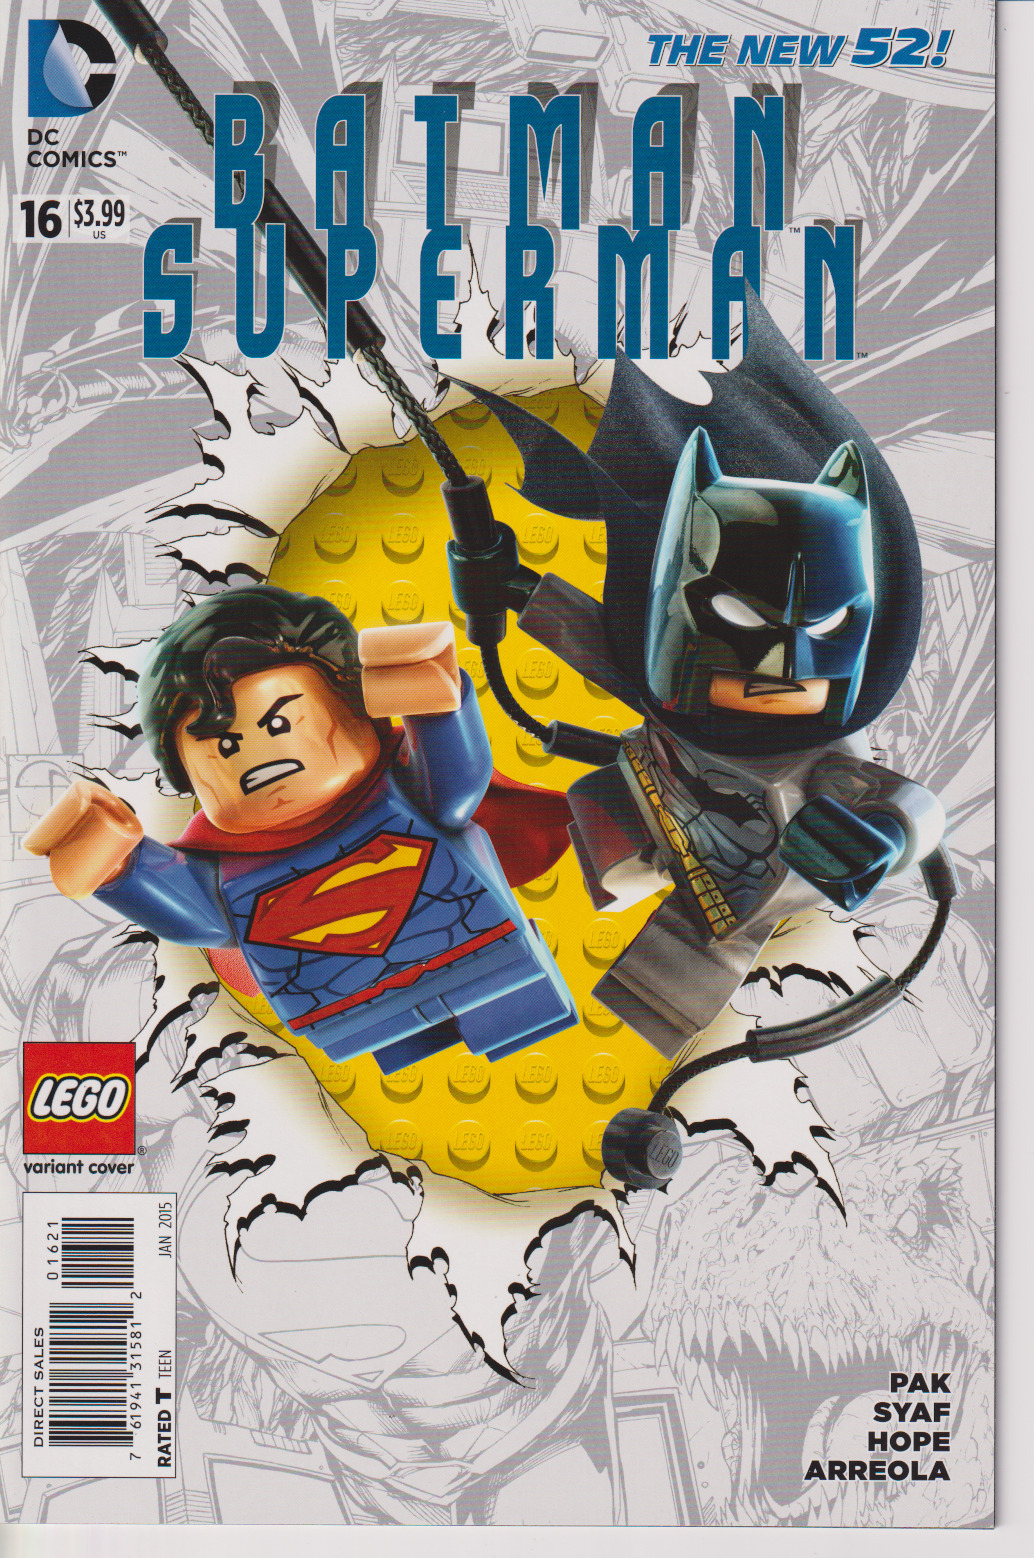 Buurt punch groot DC Comics! Batman/Superman! Issue #16! The New 52! Lego Variant Cover! |  International - Comic Books, DC Comics / HipComic